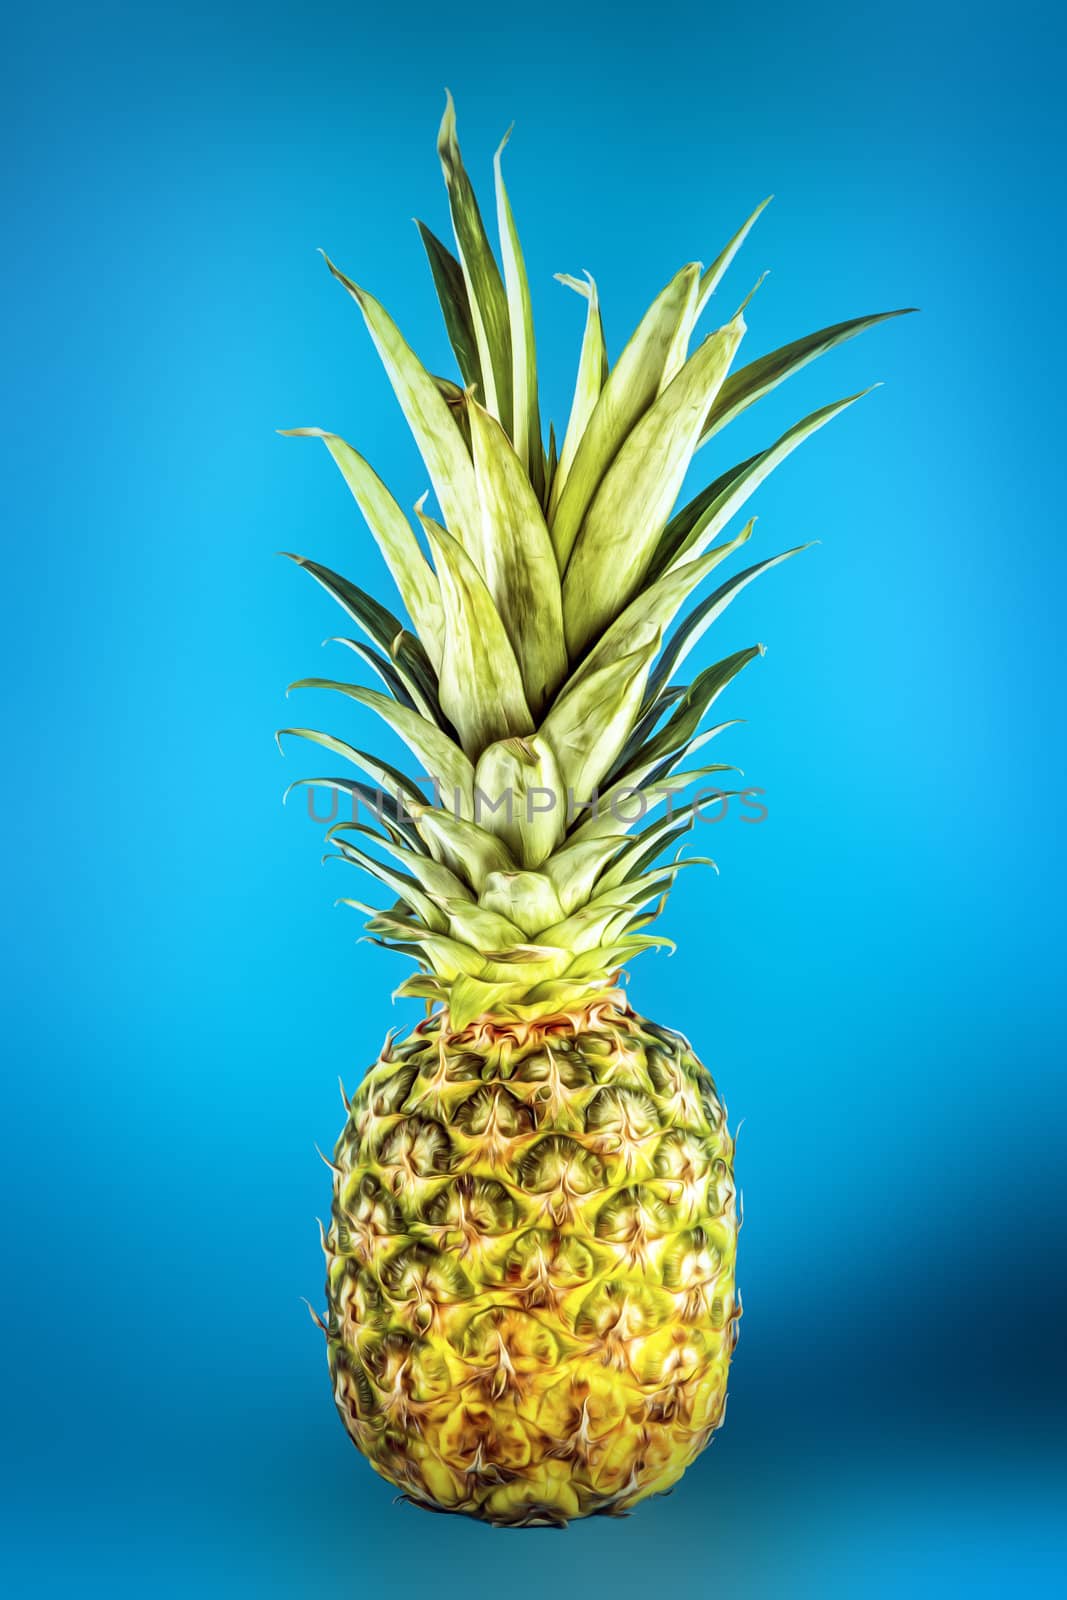 Pineapple on blue underground by w20er